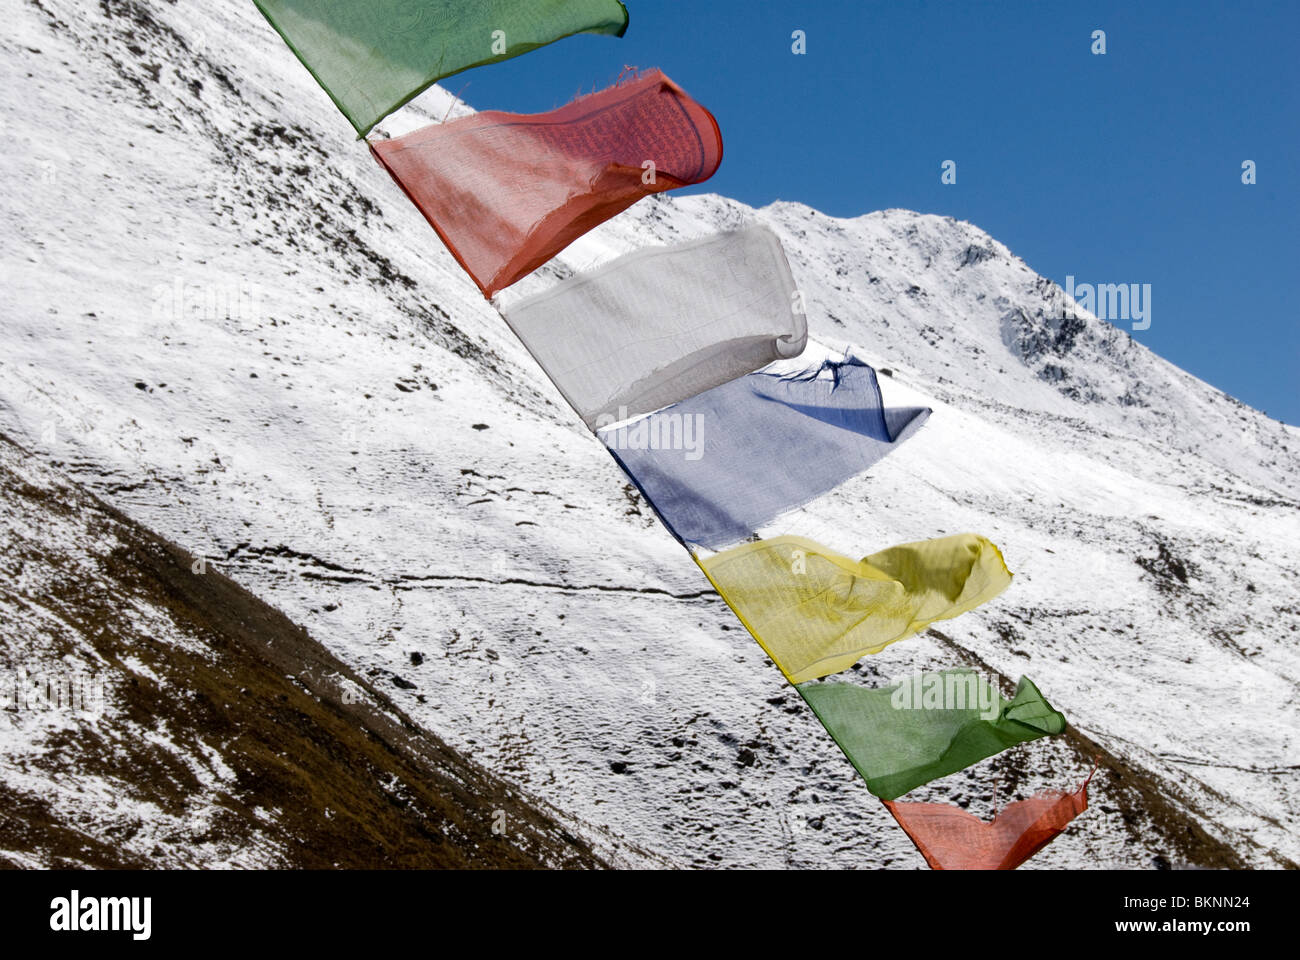 Prayer Flags and snow clad mountains, Thorung Phedi, Annapurna Circuit, Nepal Stock Photo